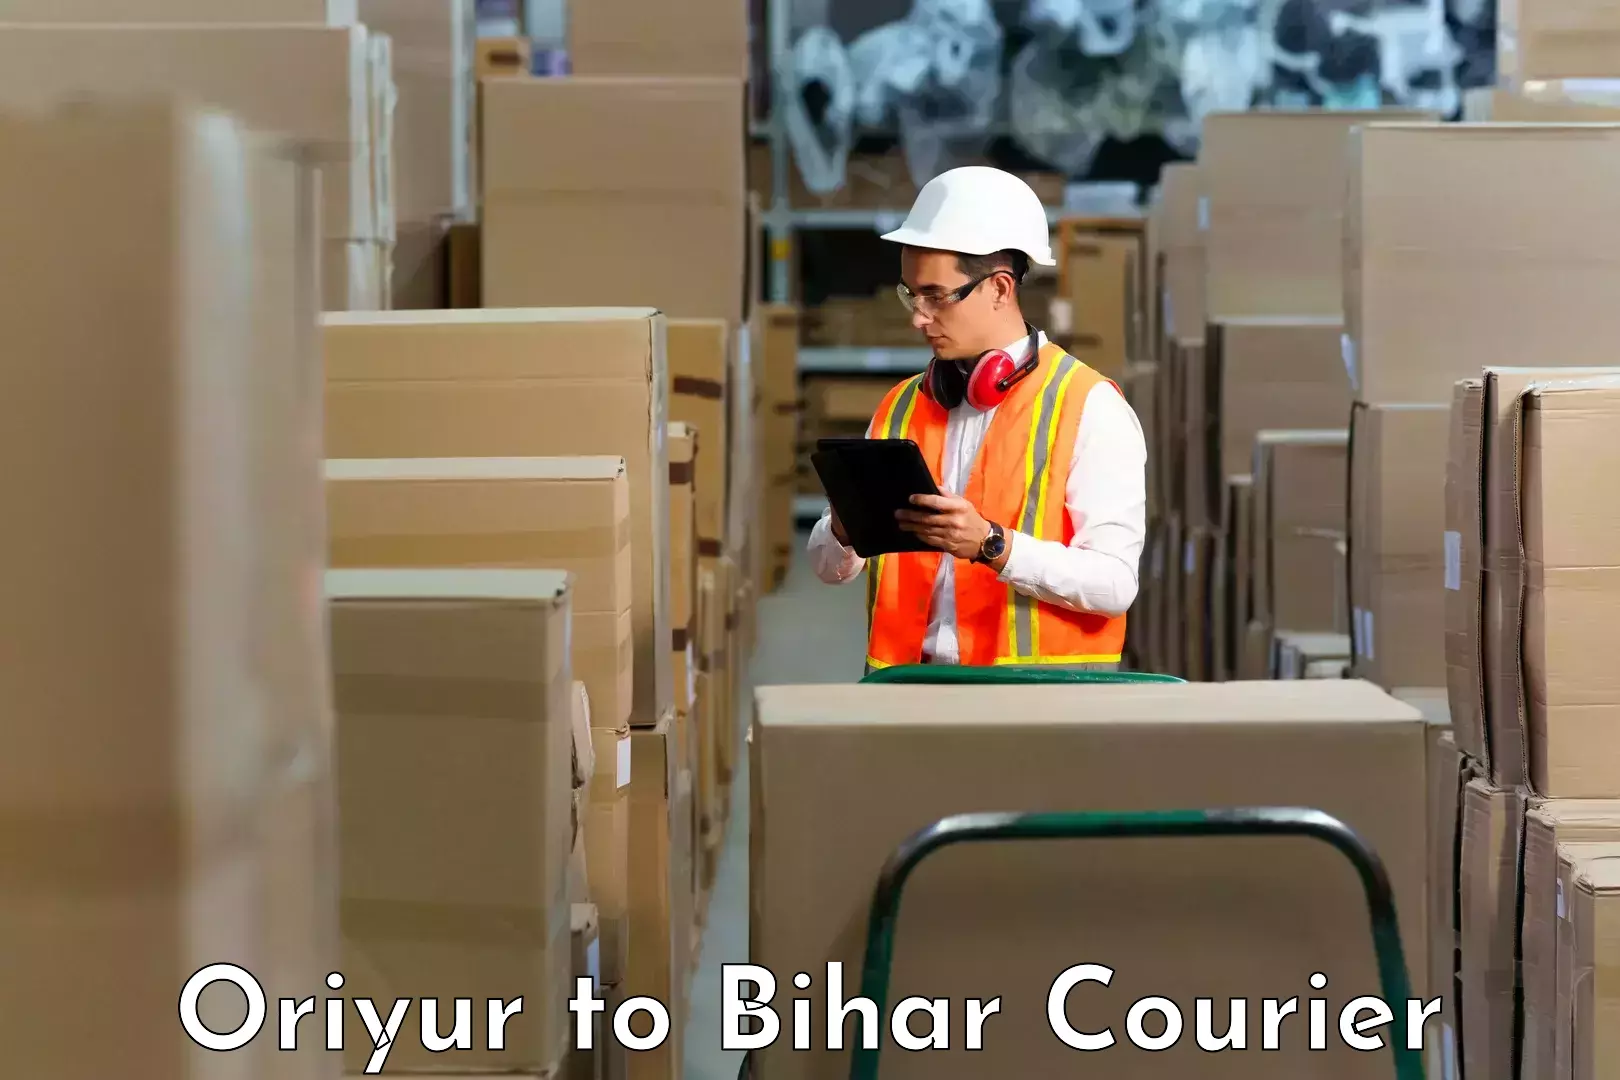 Global courier networks Oriyur to Bihar